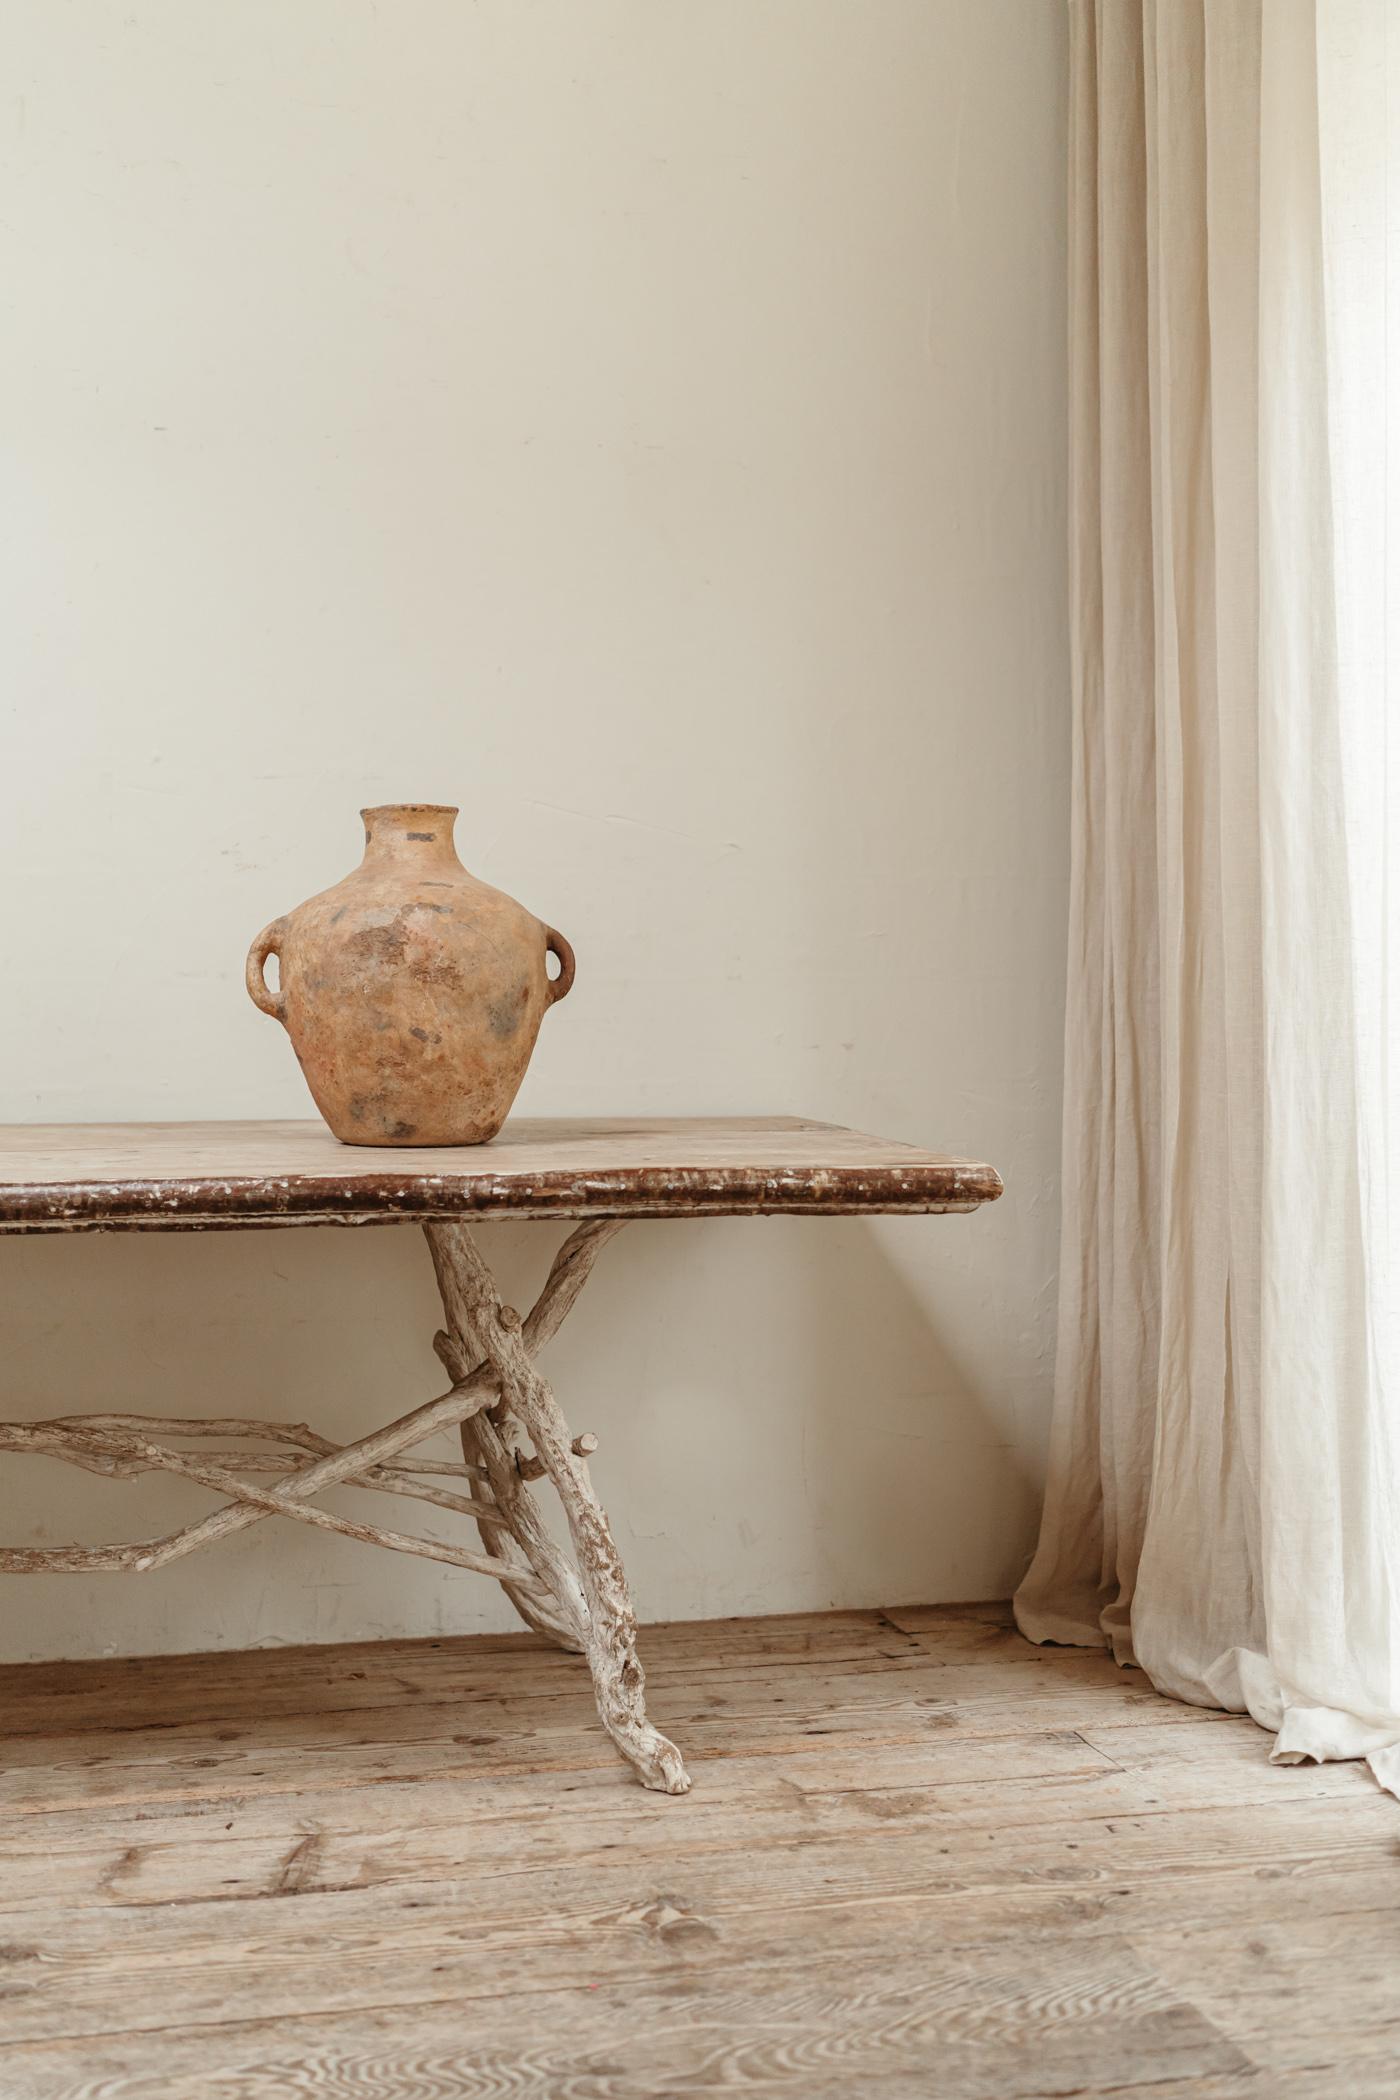 Lovely patina on this mid-19th century terra cotta berber vase/urn. Wonderful decorative object.